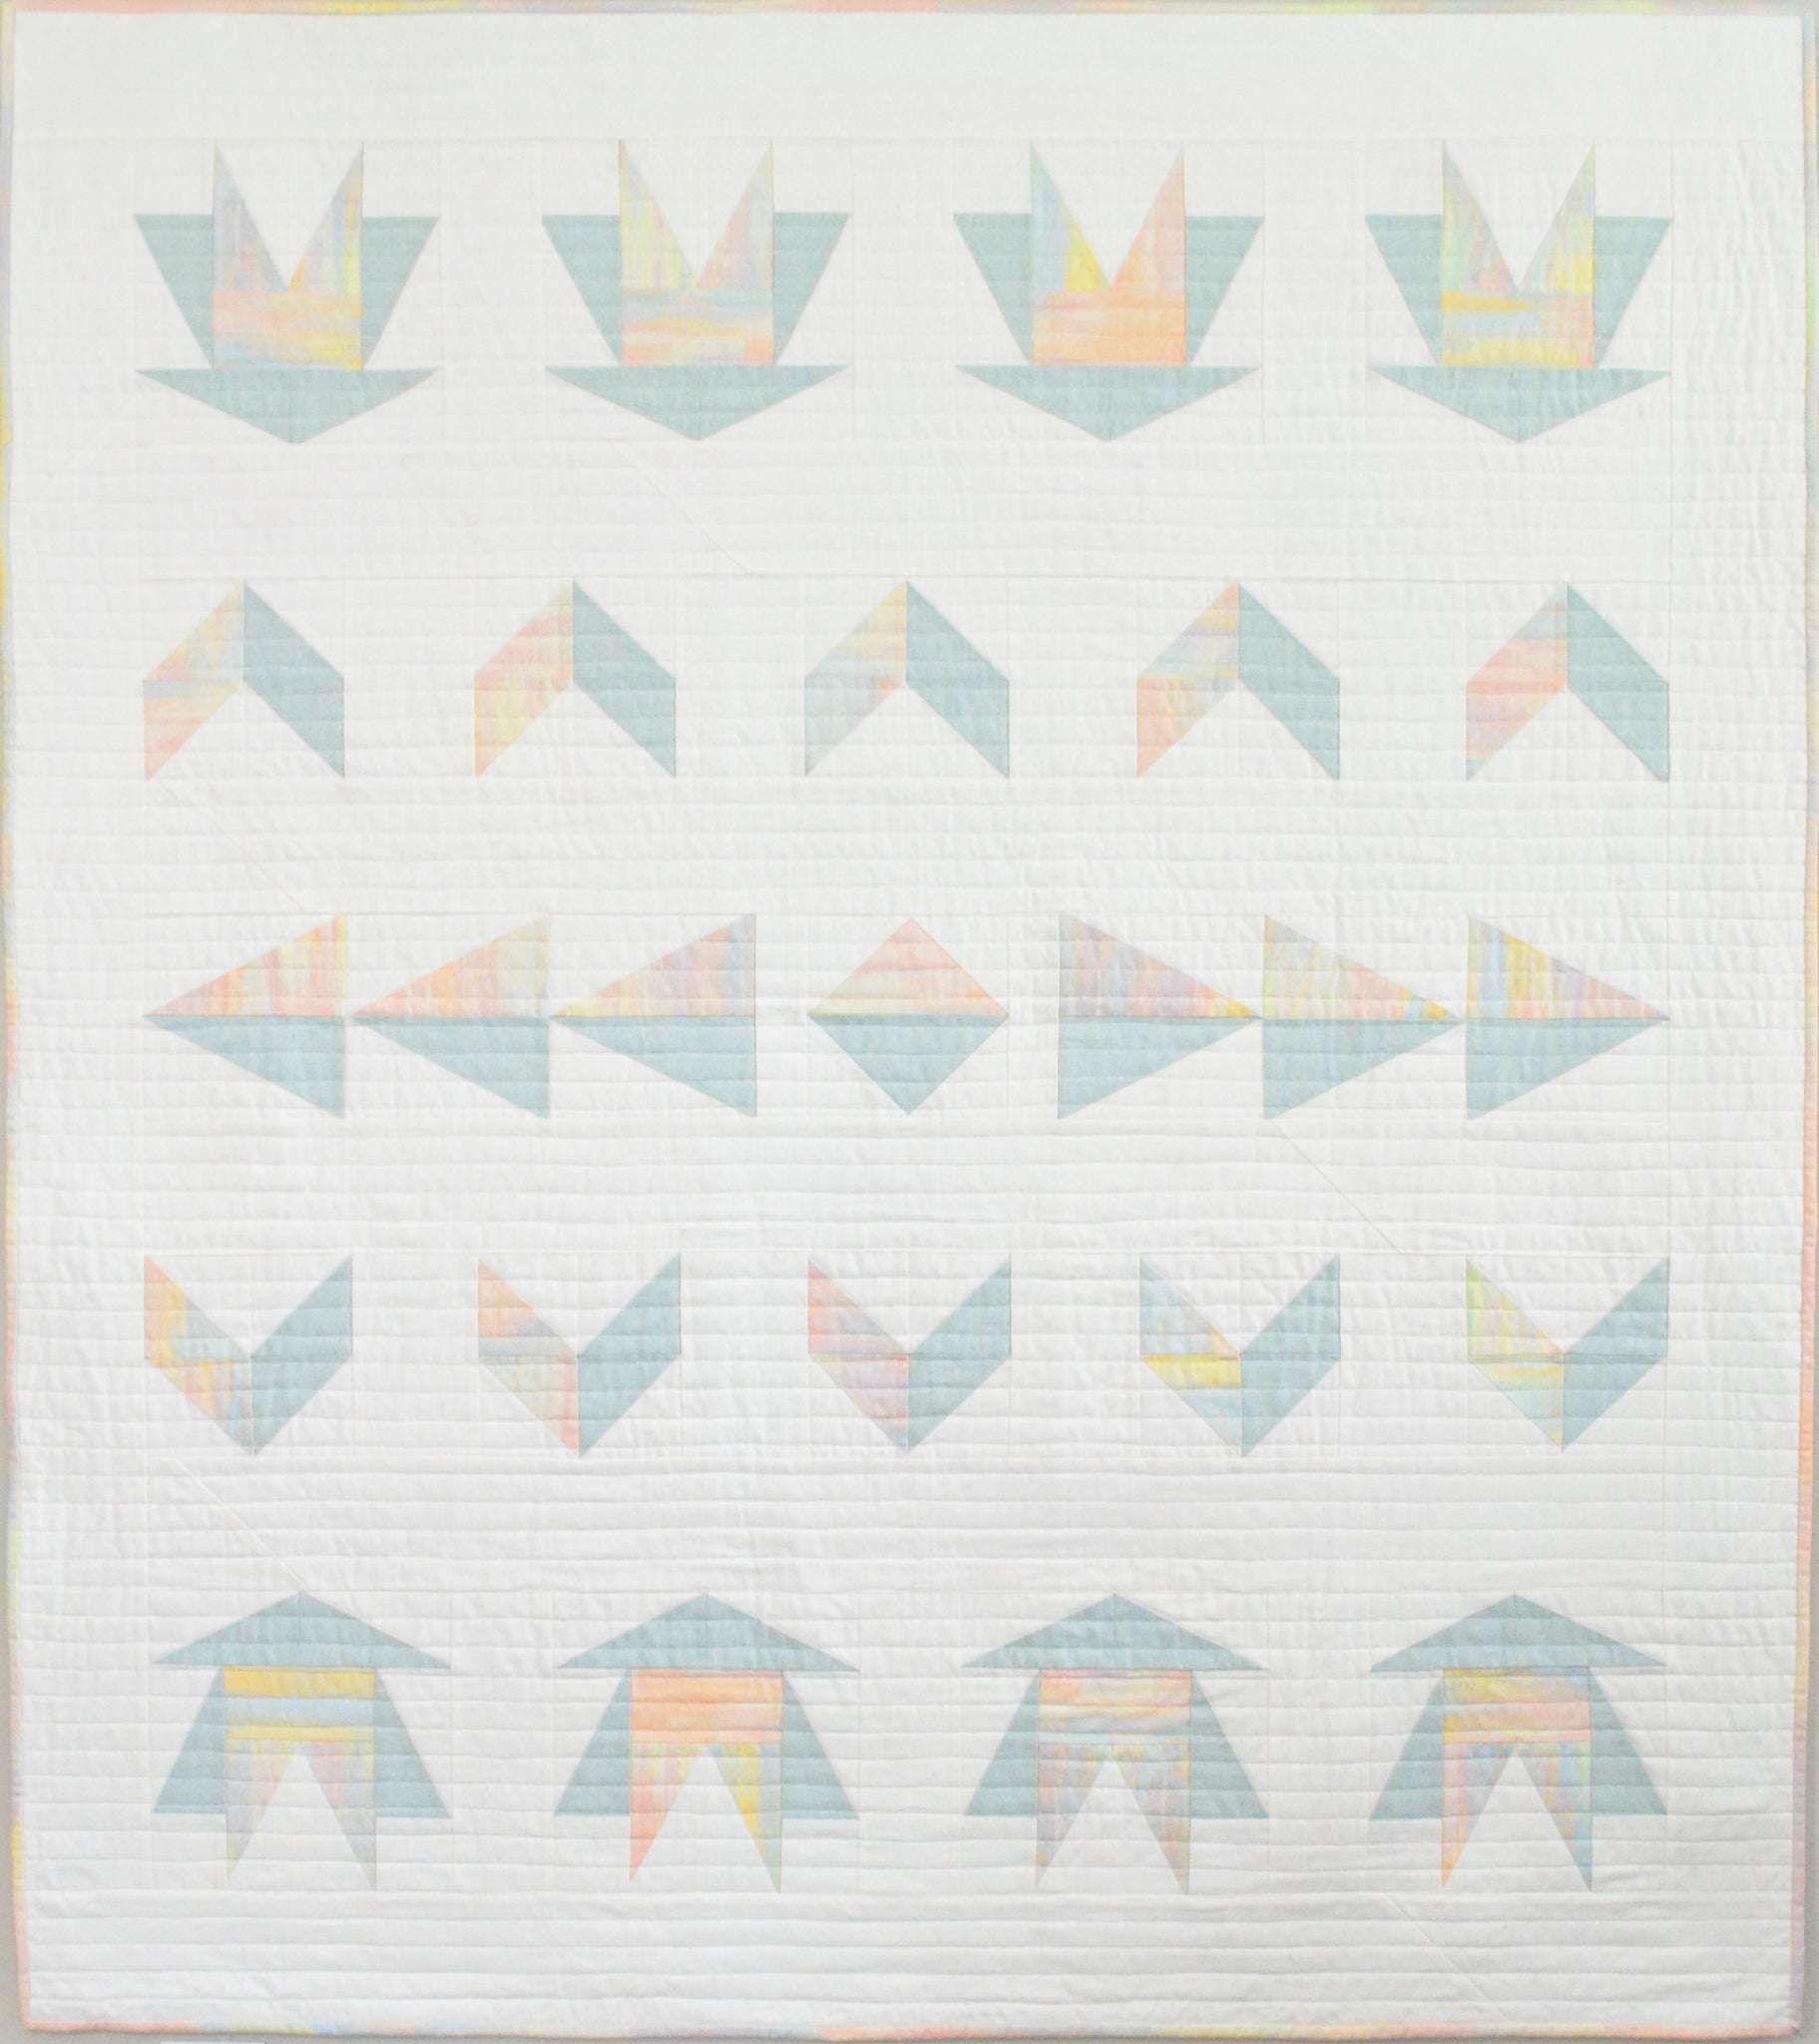 Origami Quilt DIGITAL PDF Pattern